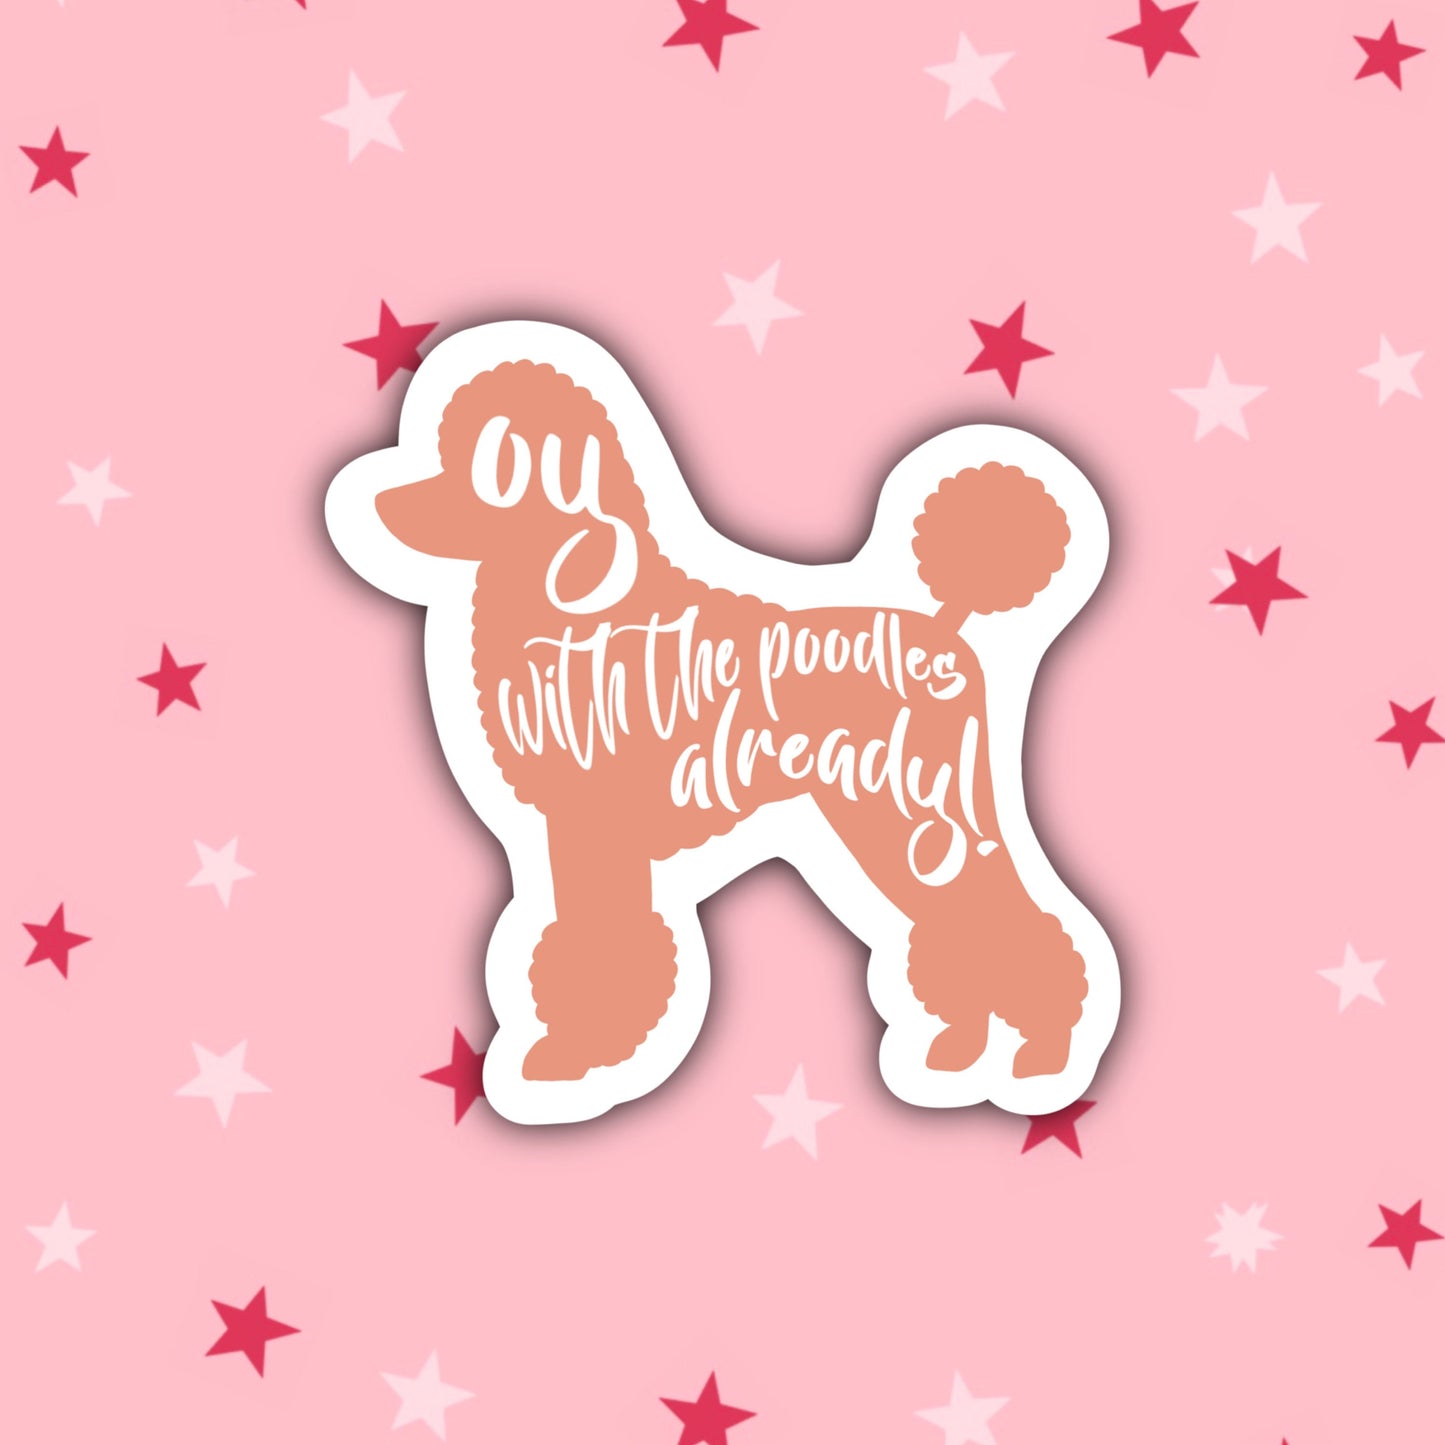 Oy With The Poodles Already! | Lorelai | Gilmore Girls Sticker